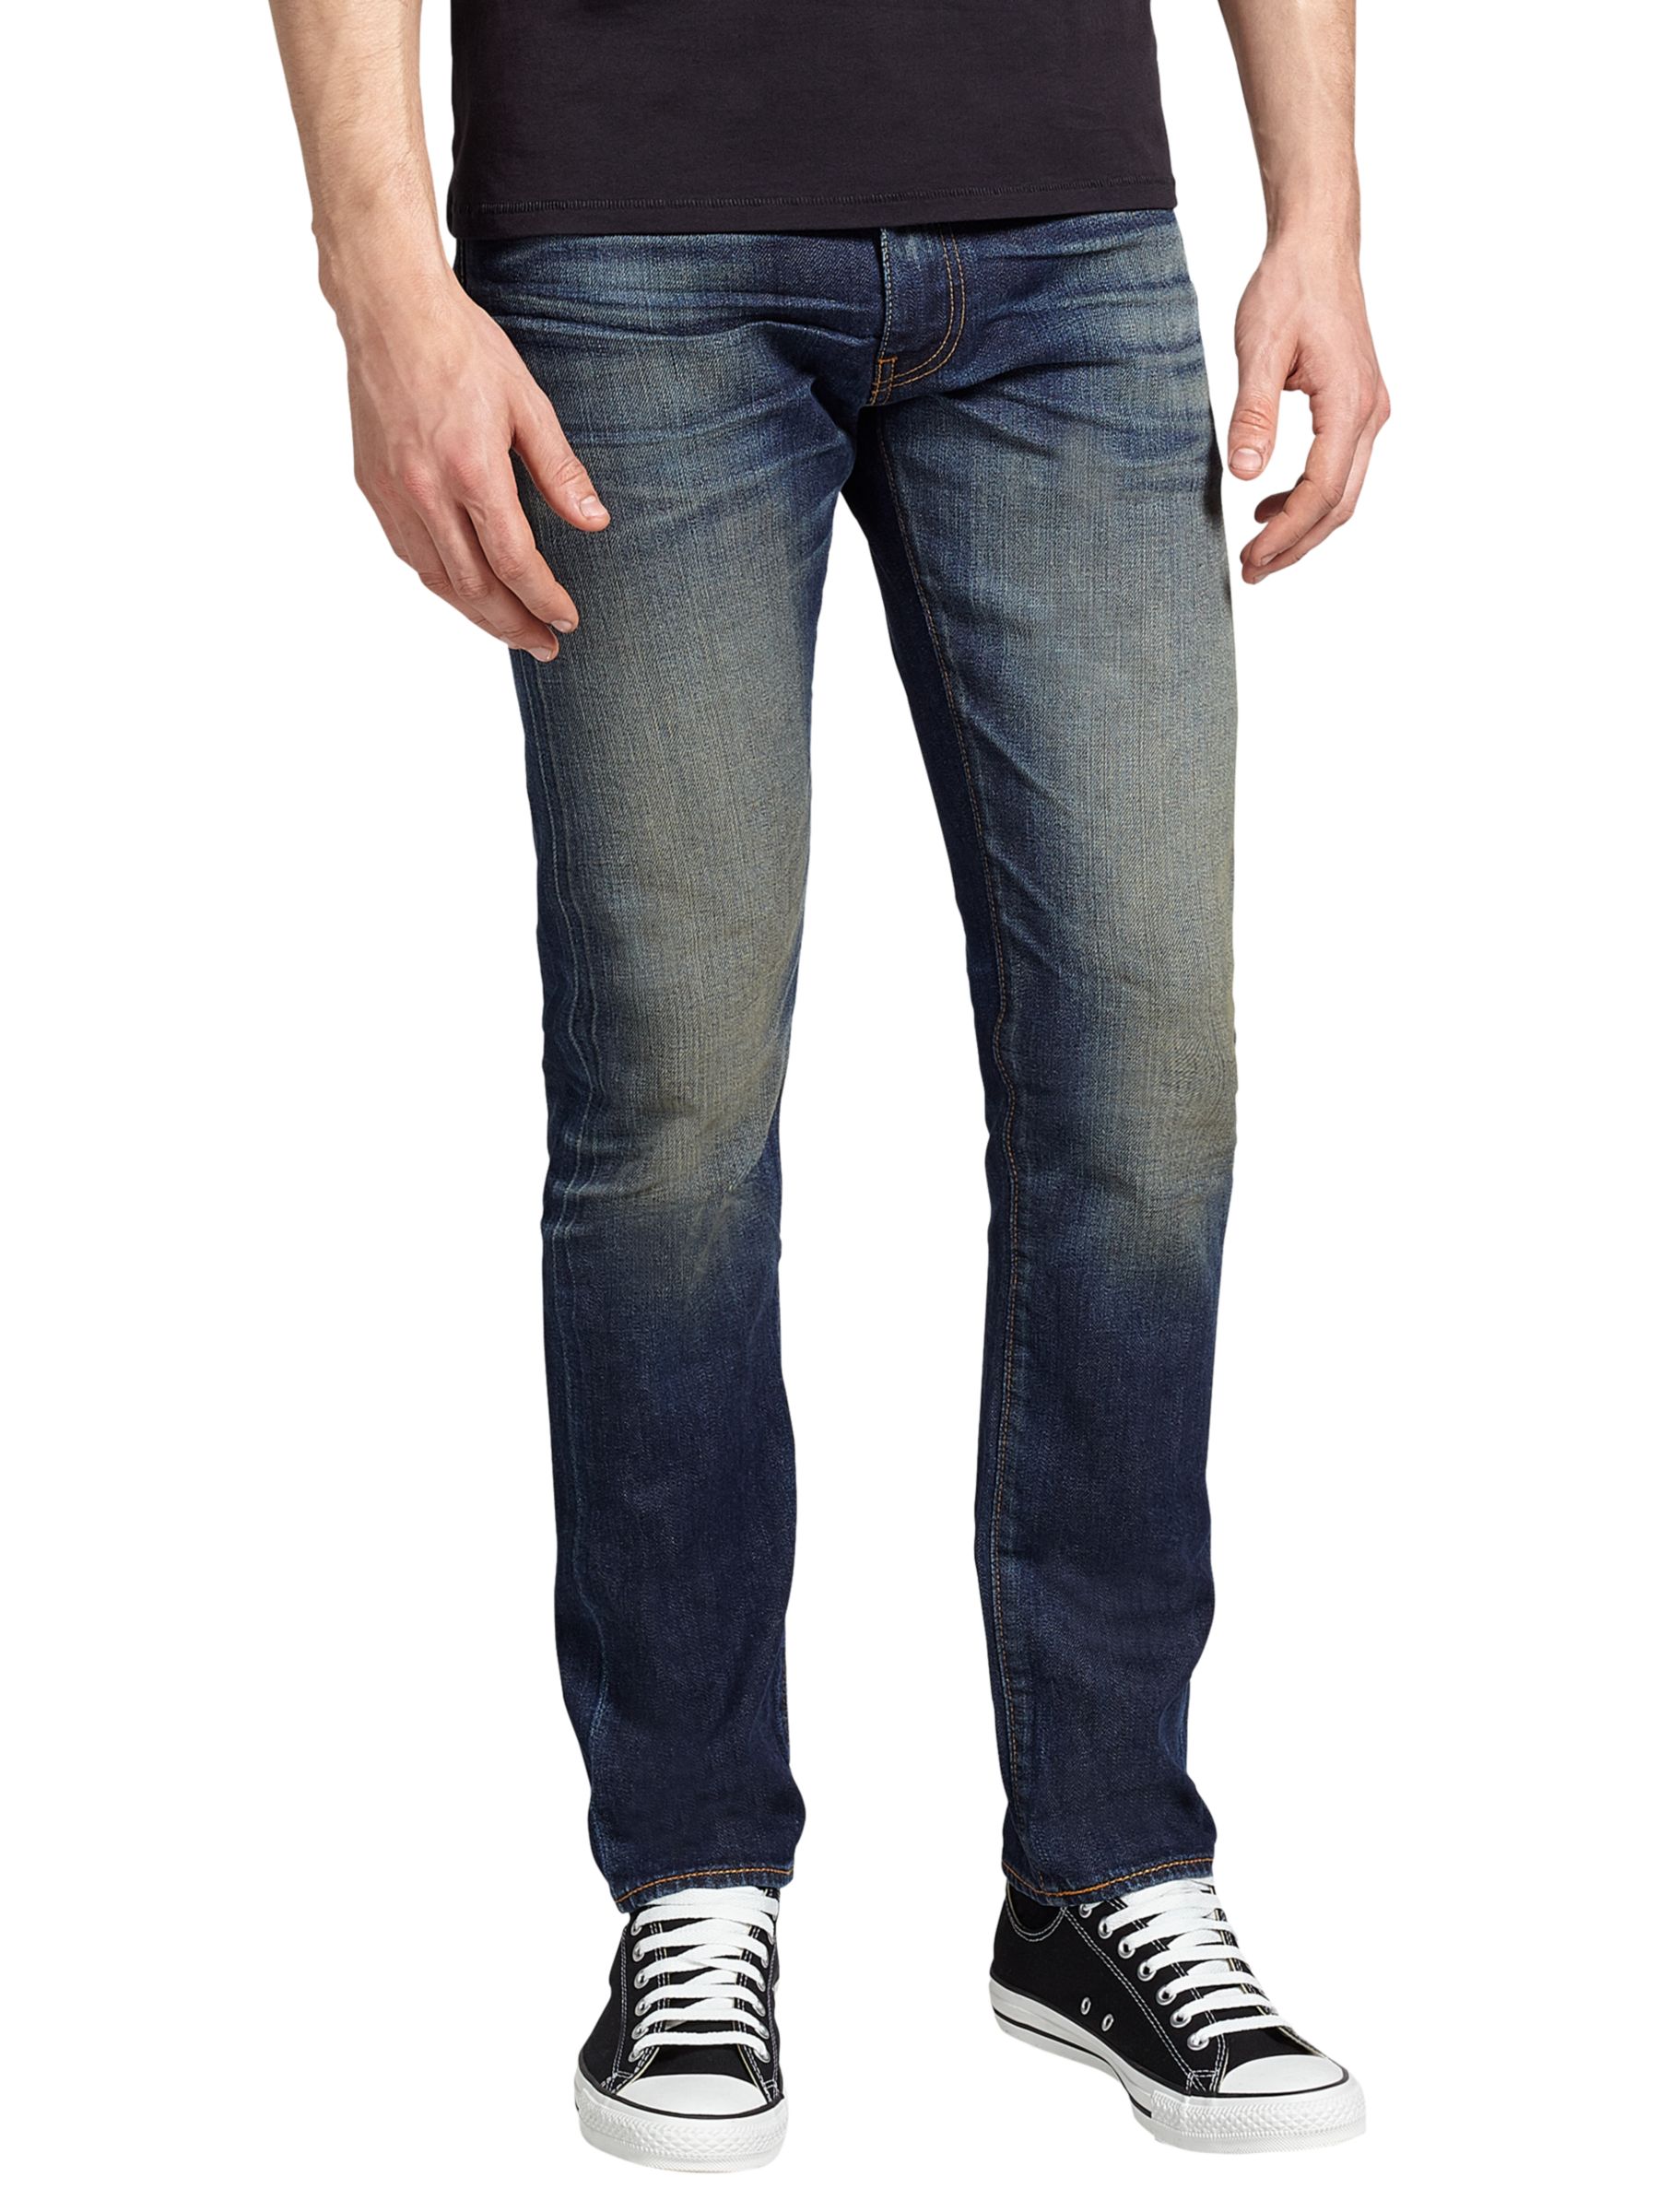 levis 511 selvedge jeans